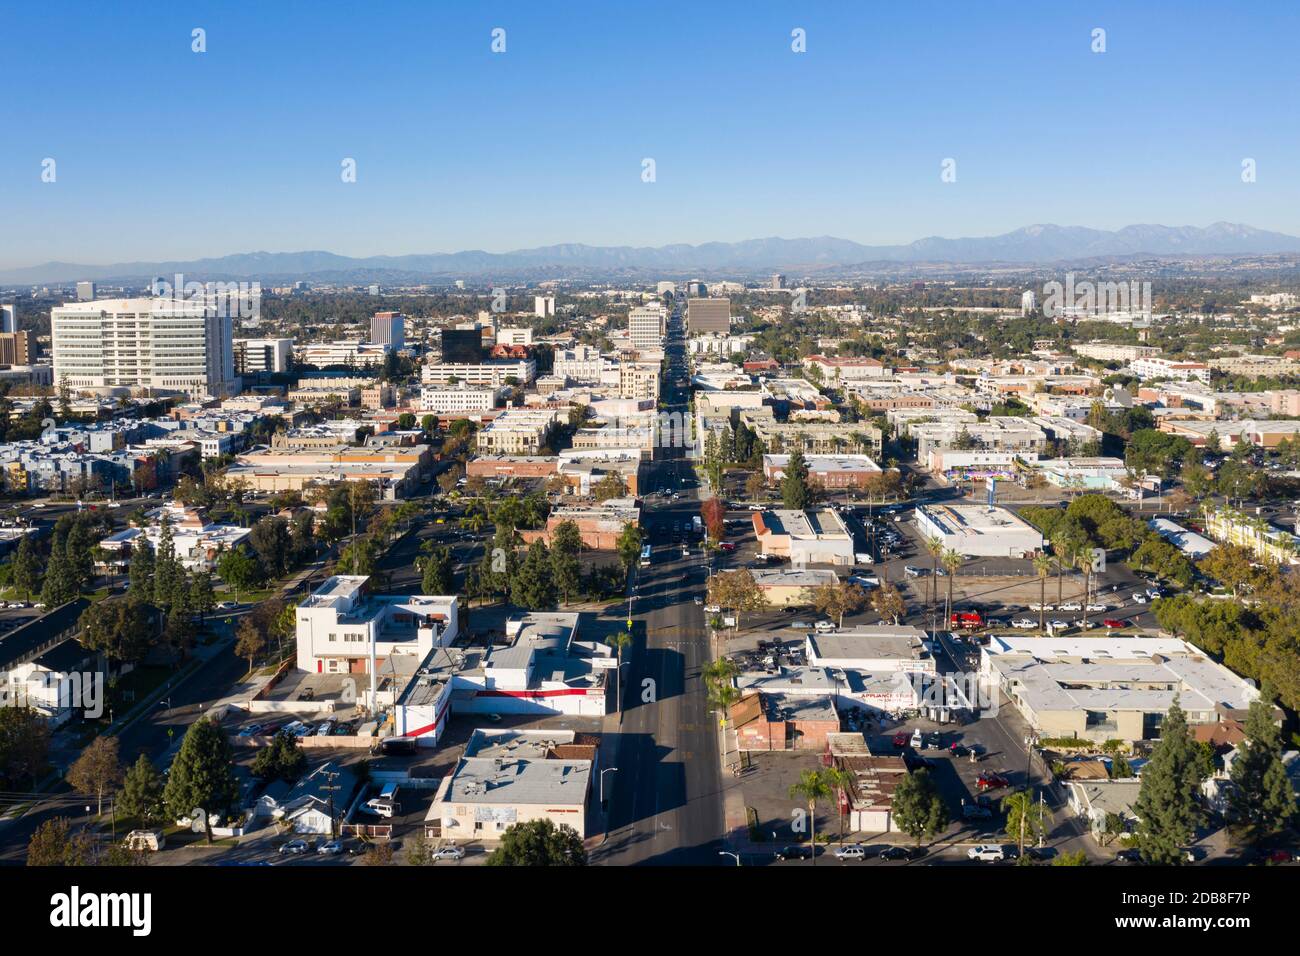 Aerial view looking north along Main Street in downtown Santa Ana, California Stock Photo